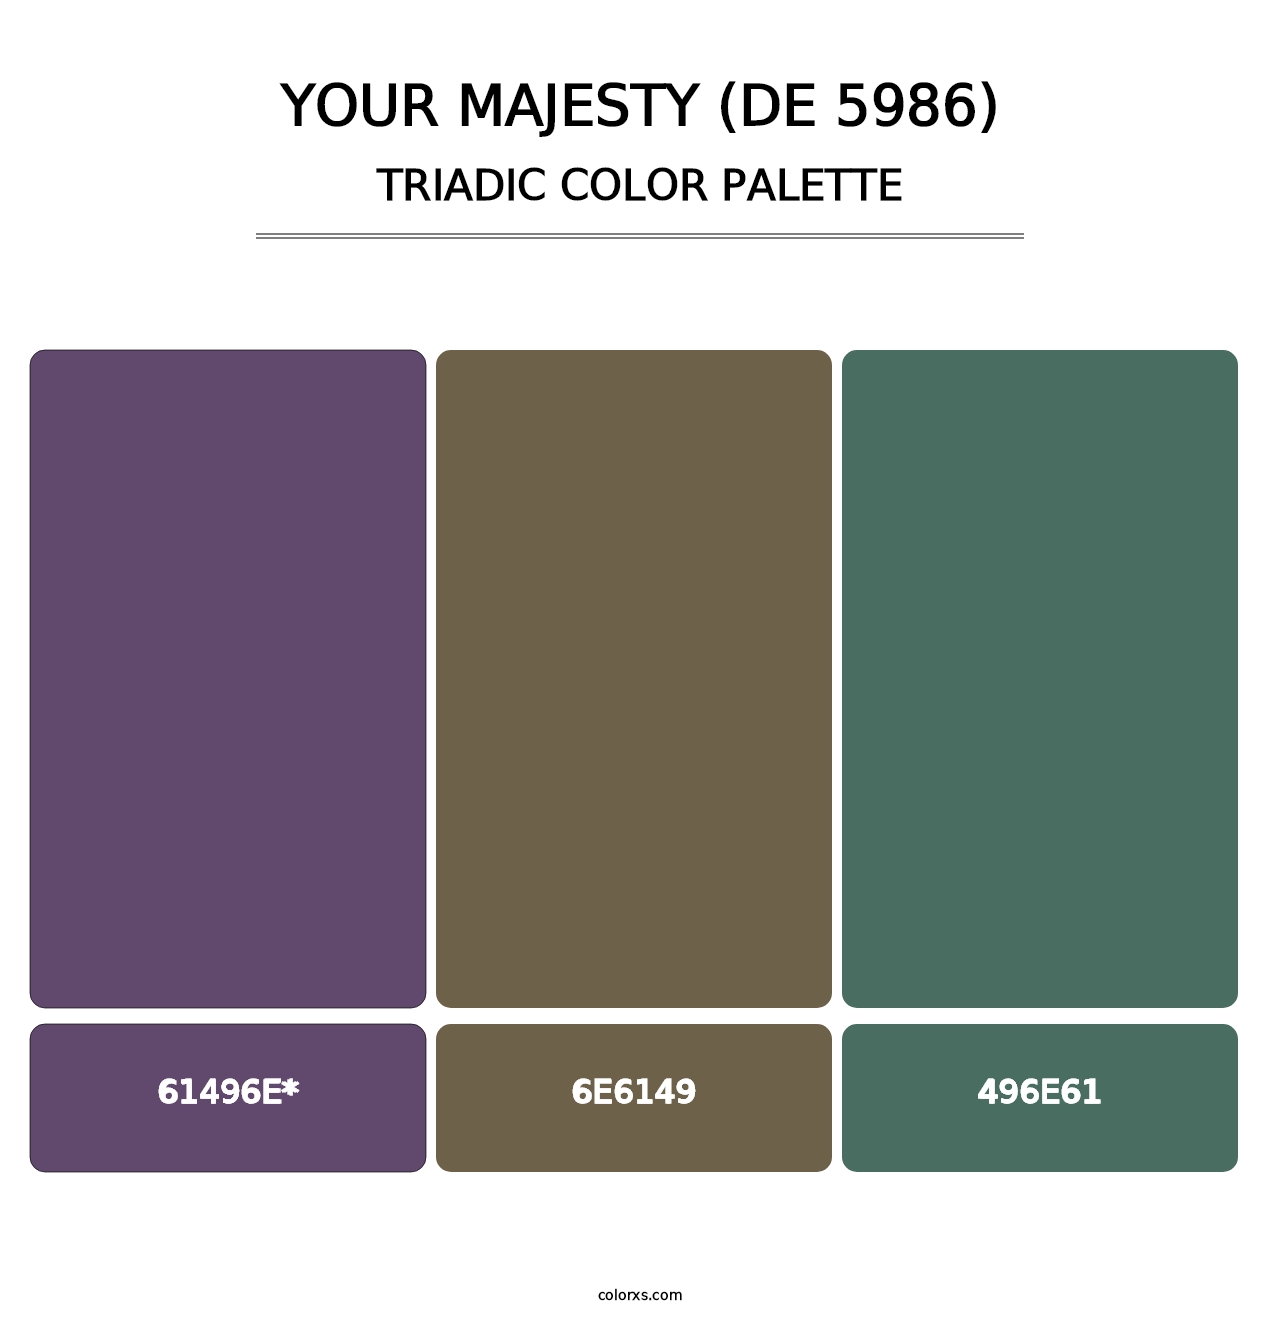 Your Majesty (DE 5986) - Triadic Color Palette